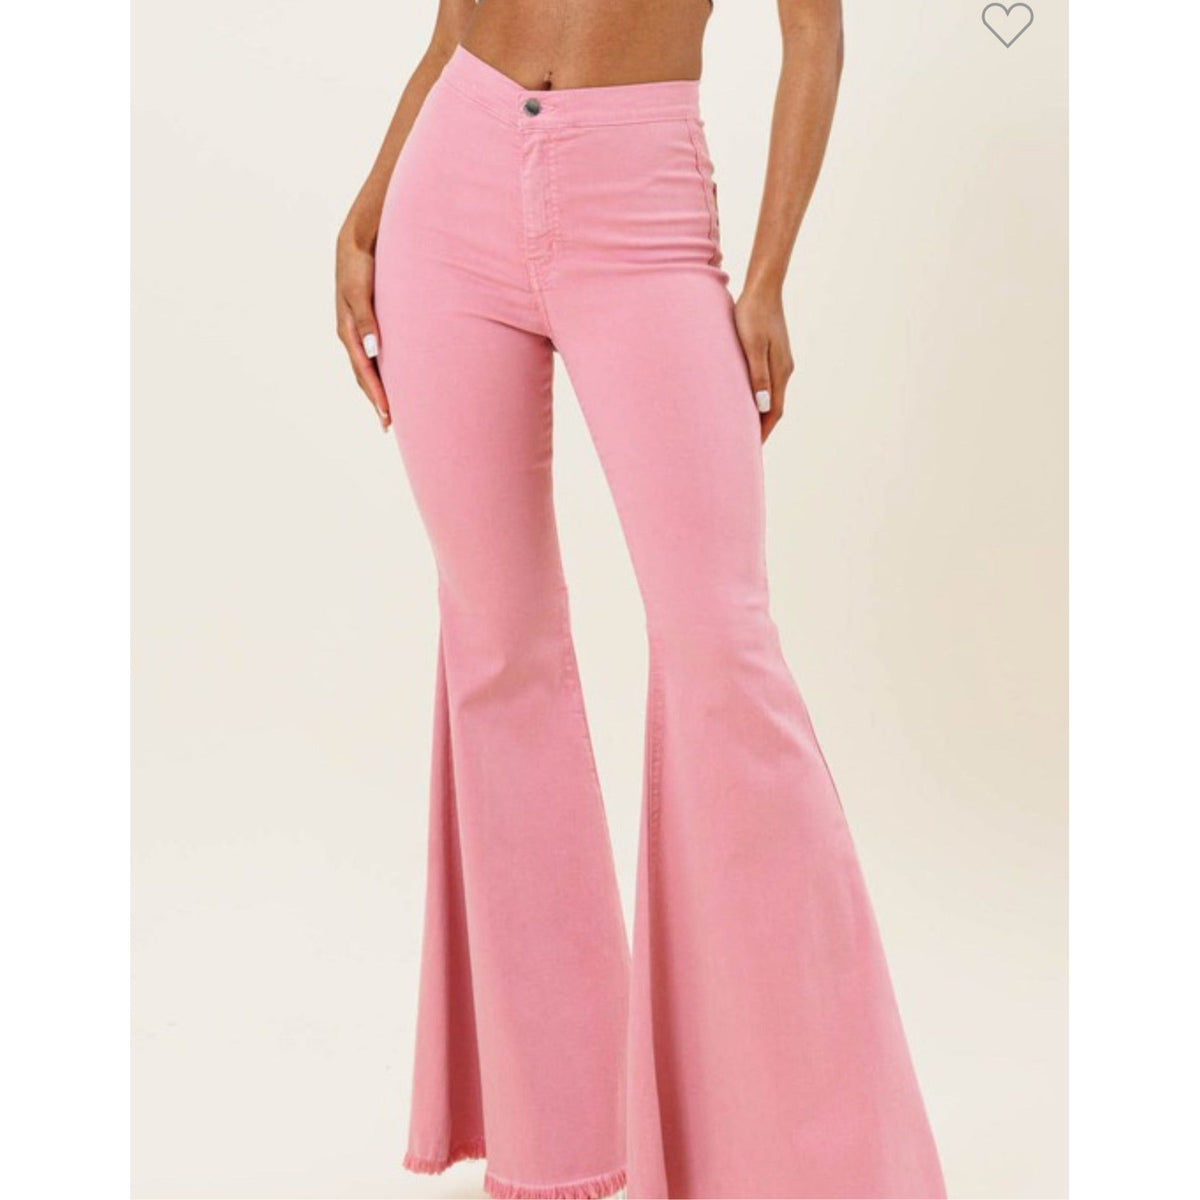 Blush pink soft denim flare bell jeans